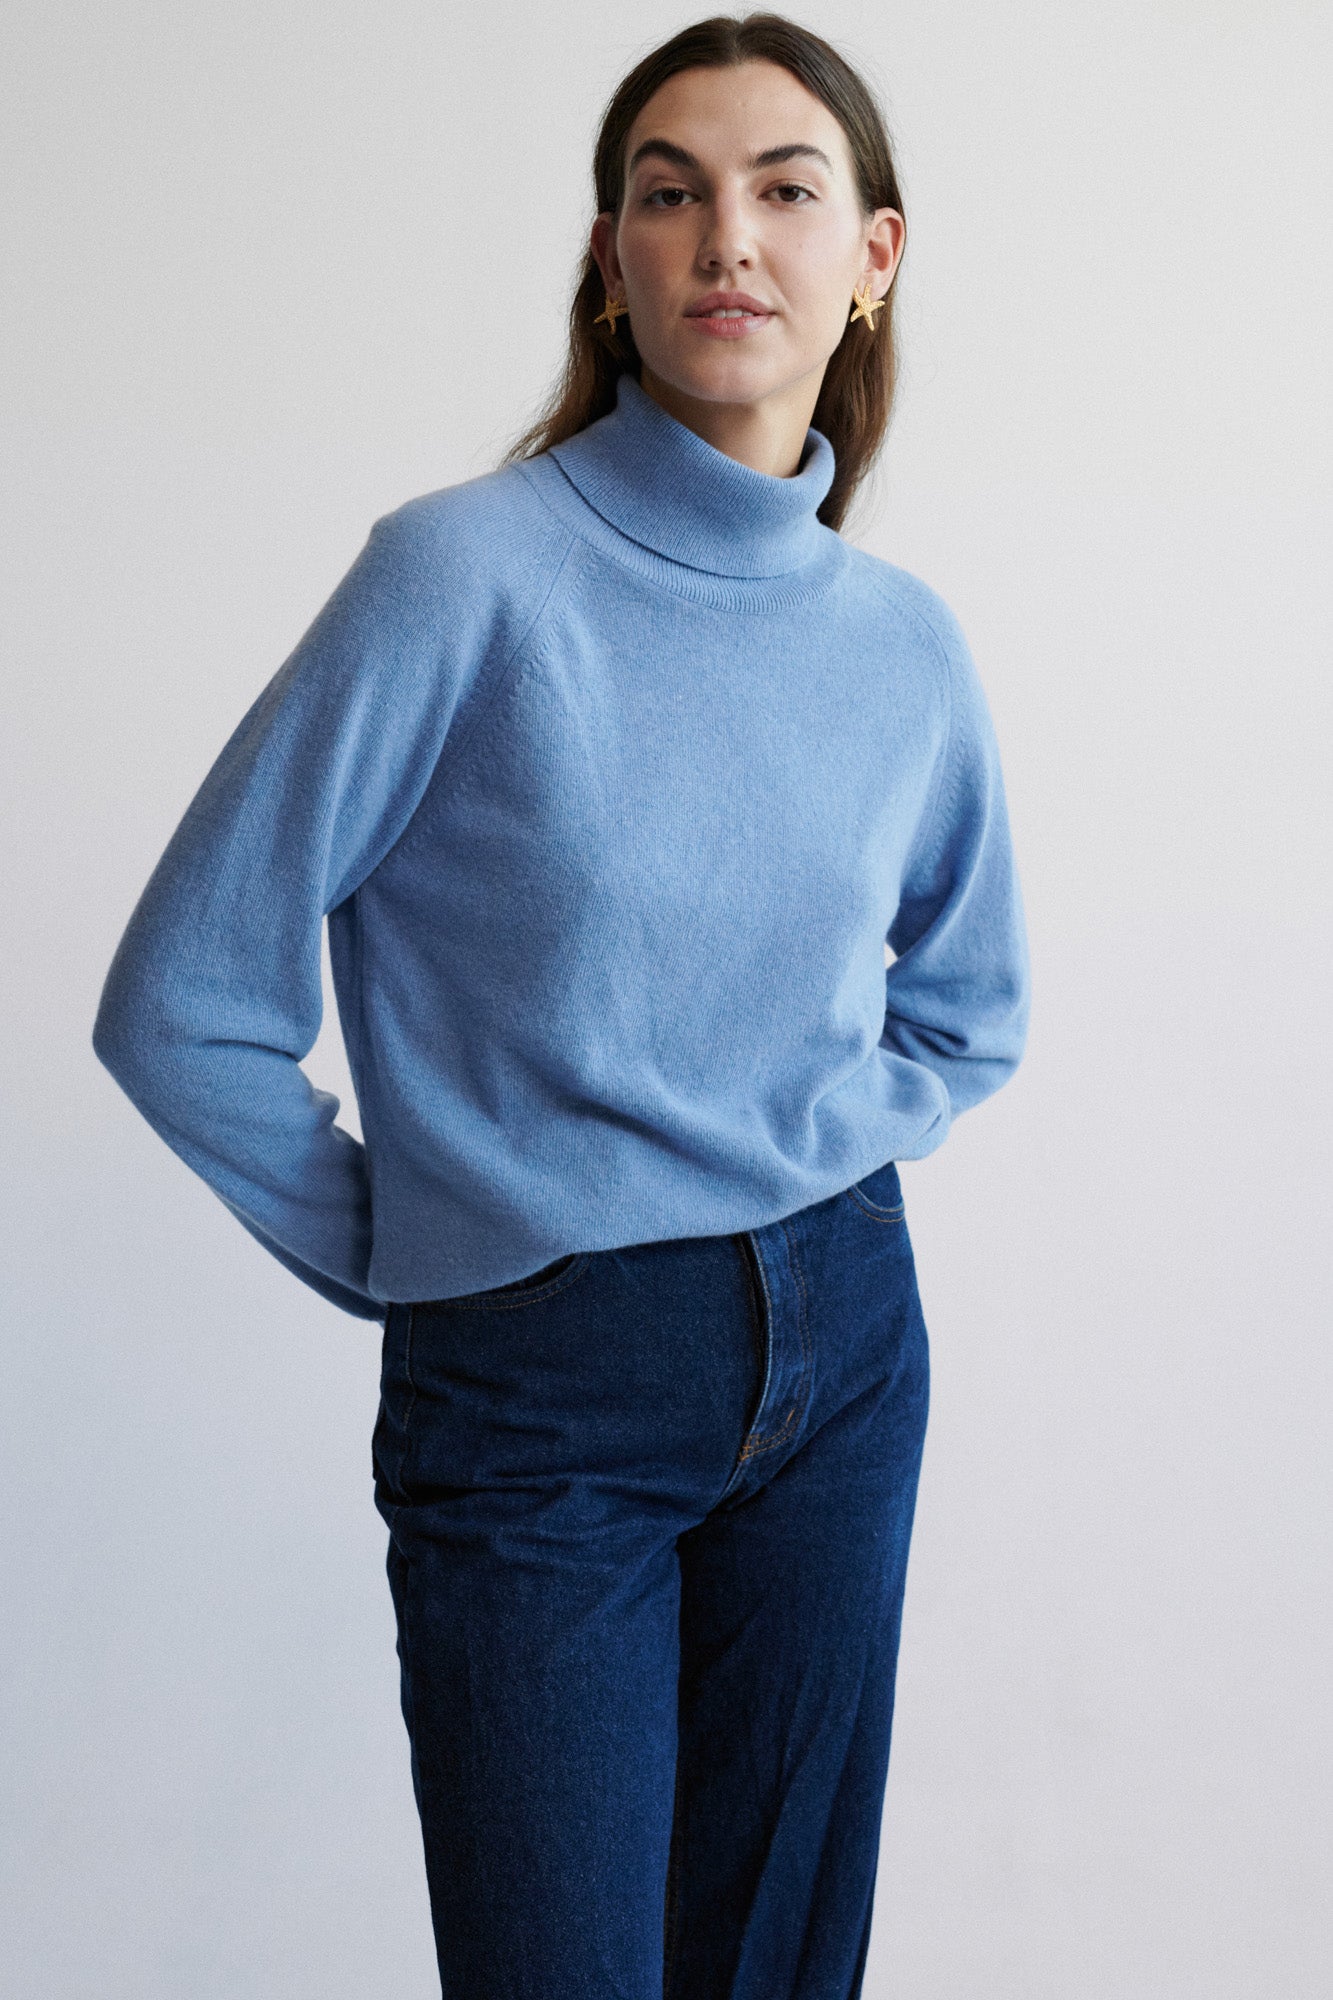 Sweater in merino wool / 16 / 13 / ocean blue ?The model is 178 cm tall and wears size XS/S?